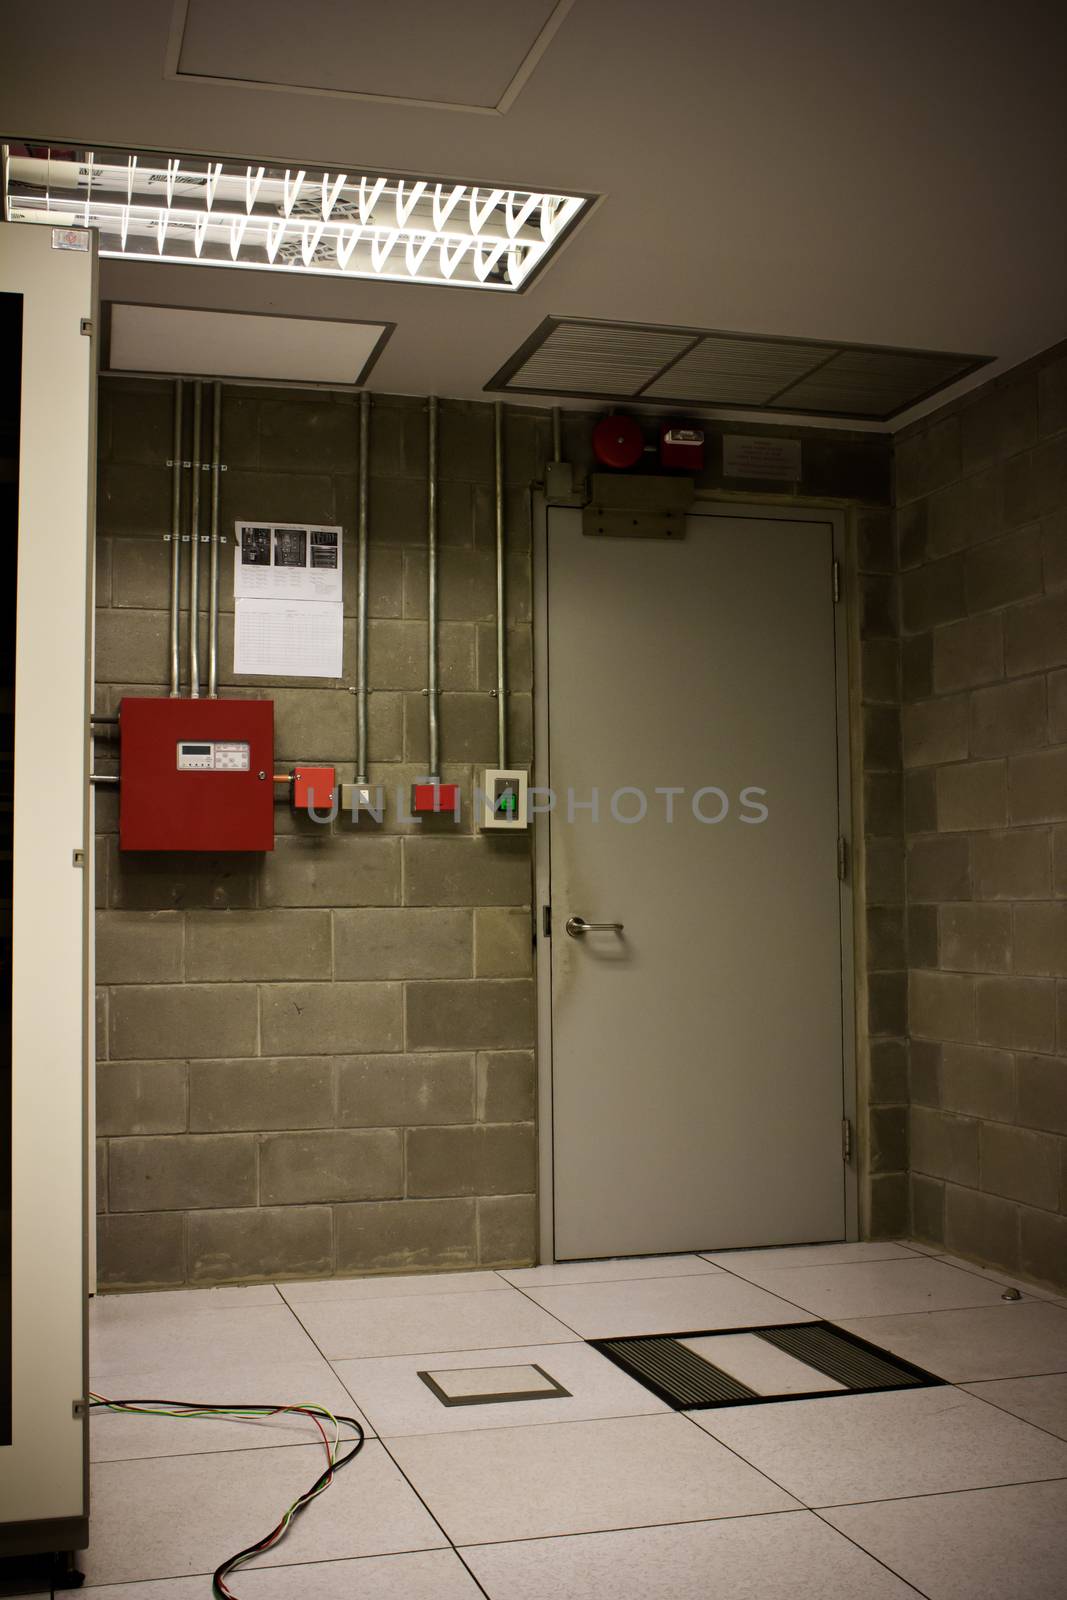 server room in datacenter  by shutterbird